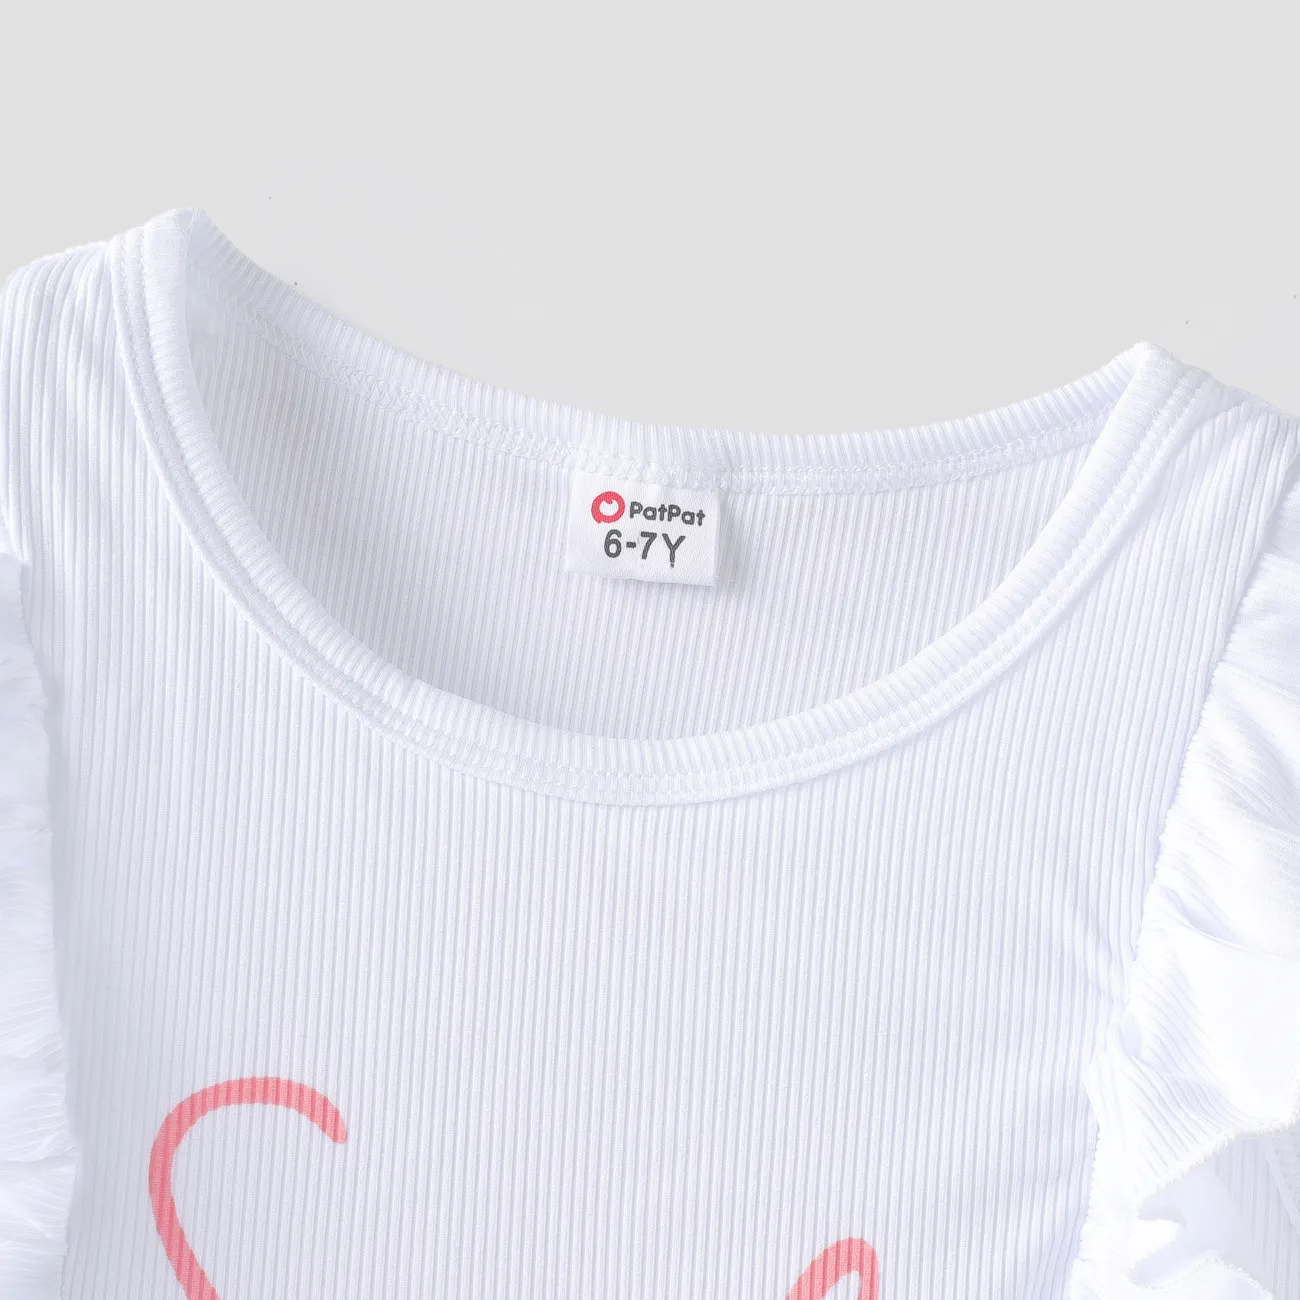 2pcs Kid Girl Letter Print Flutter-sleeve Tee and Heart Print Belted Shorts Set Pink big image 1